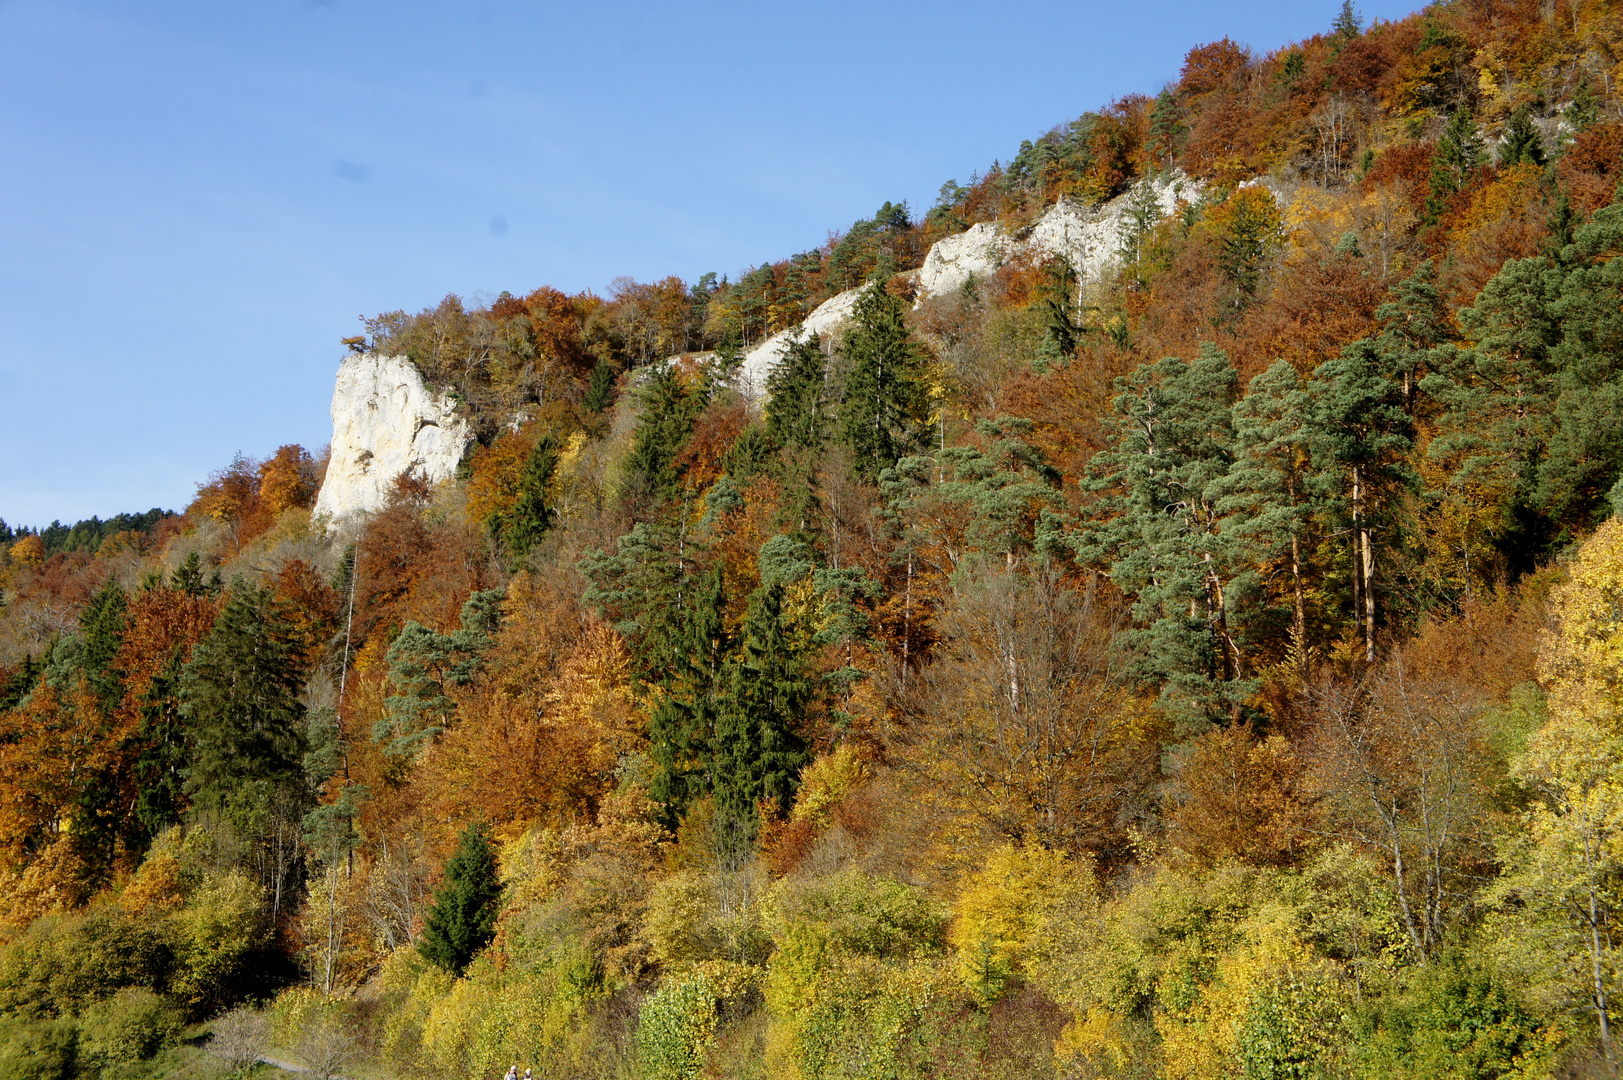 Herbst im Donautal 2